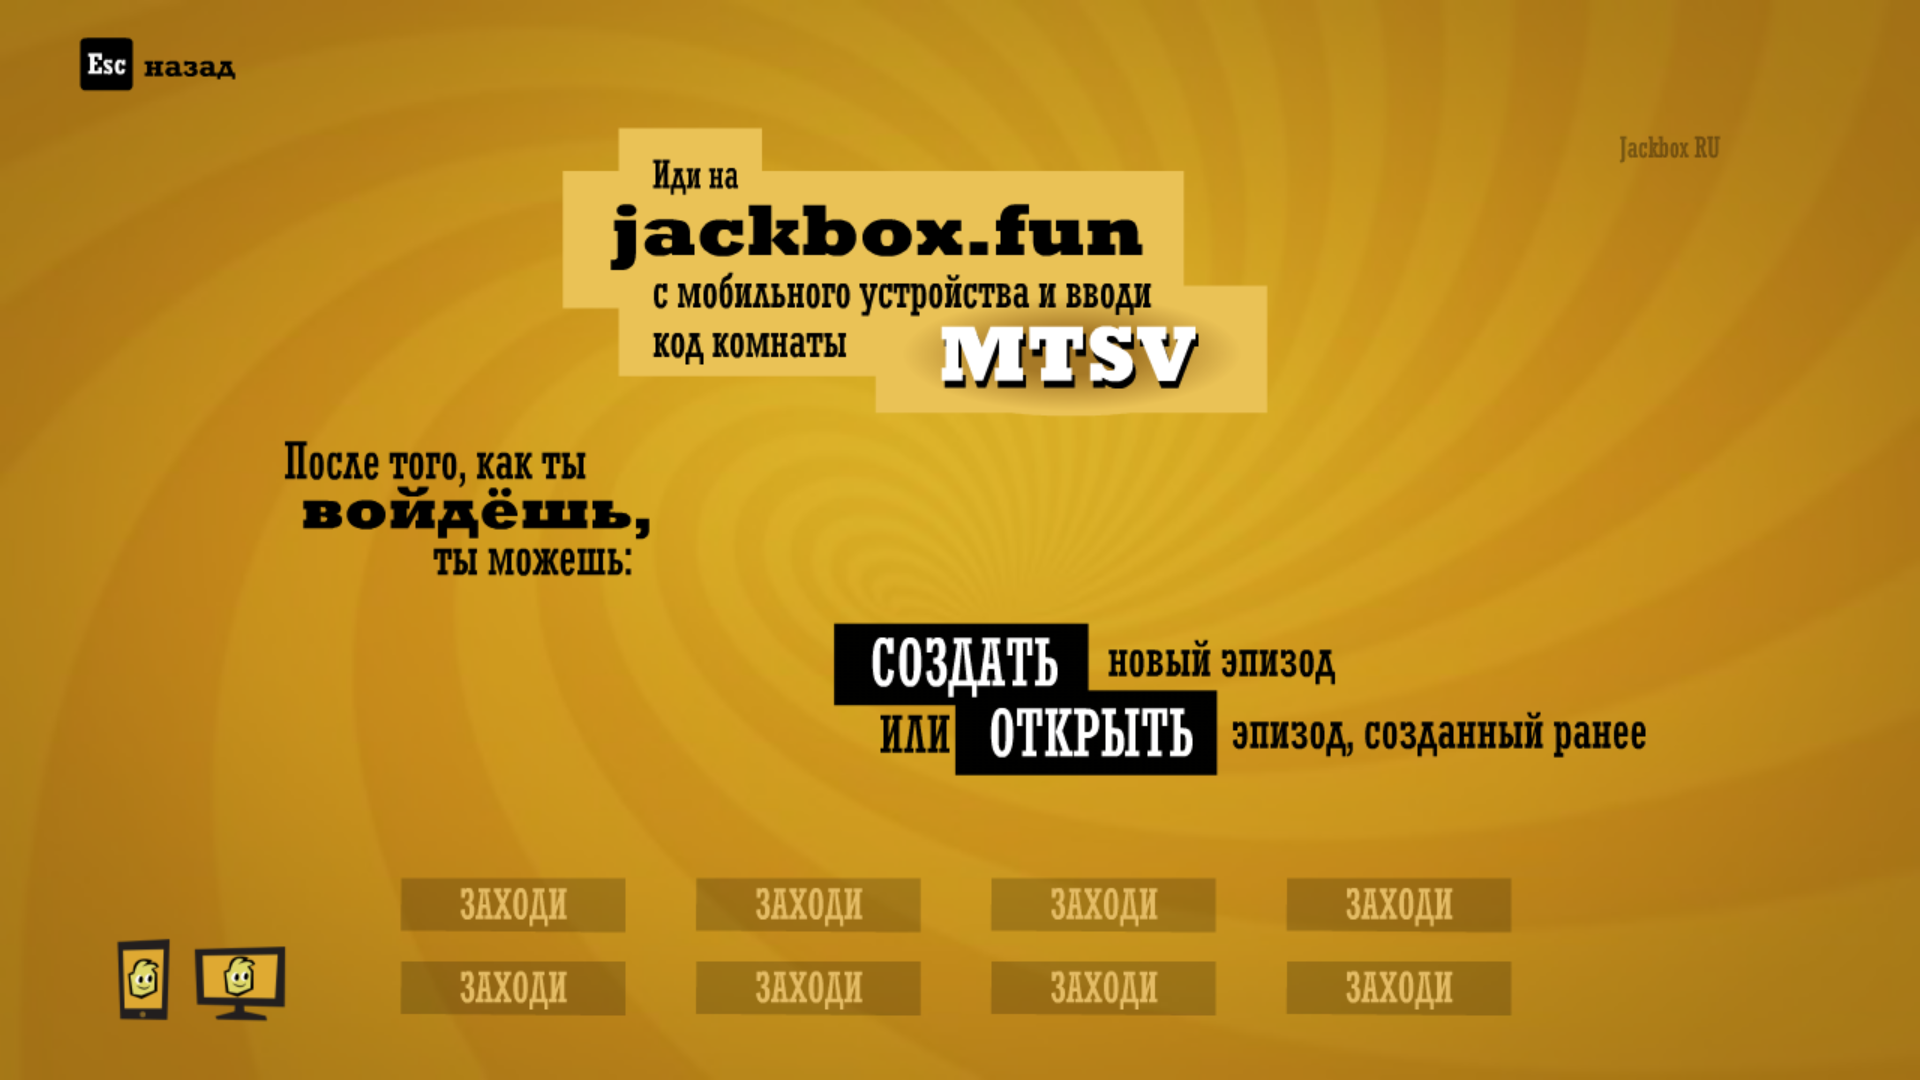 Jack Box fun. Jackbox fun игра. Комнаты на Jackbox. Jack Box 3 игры.